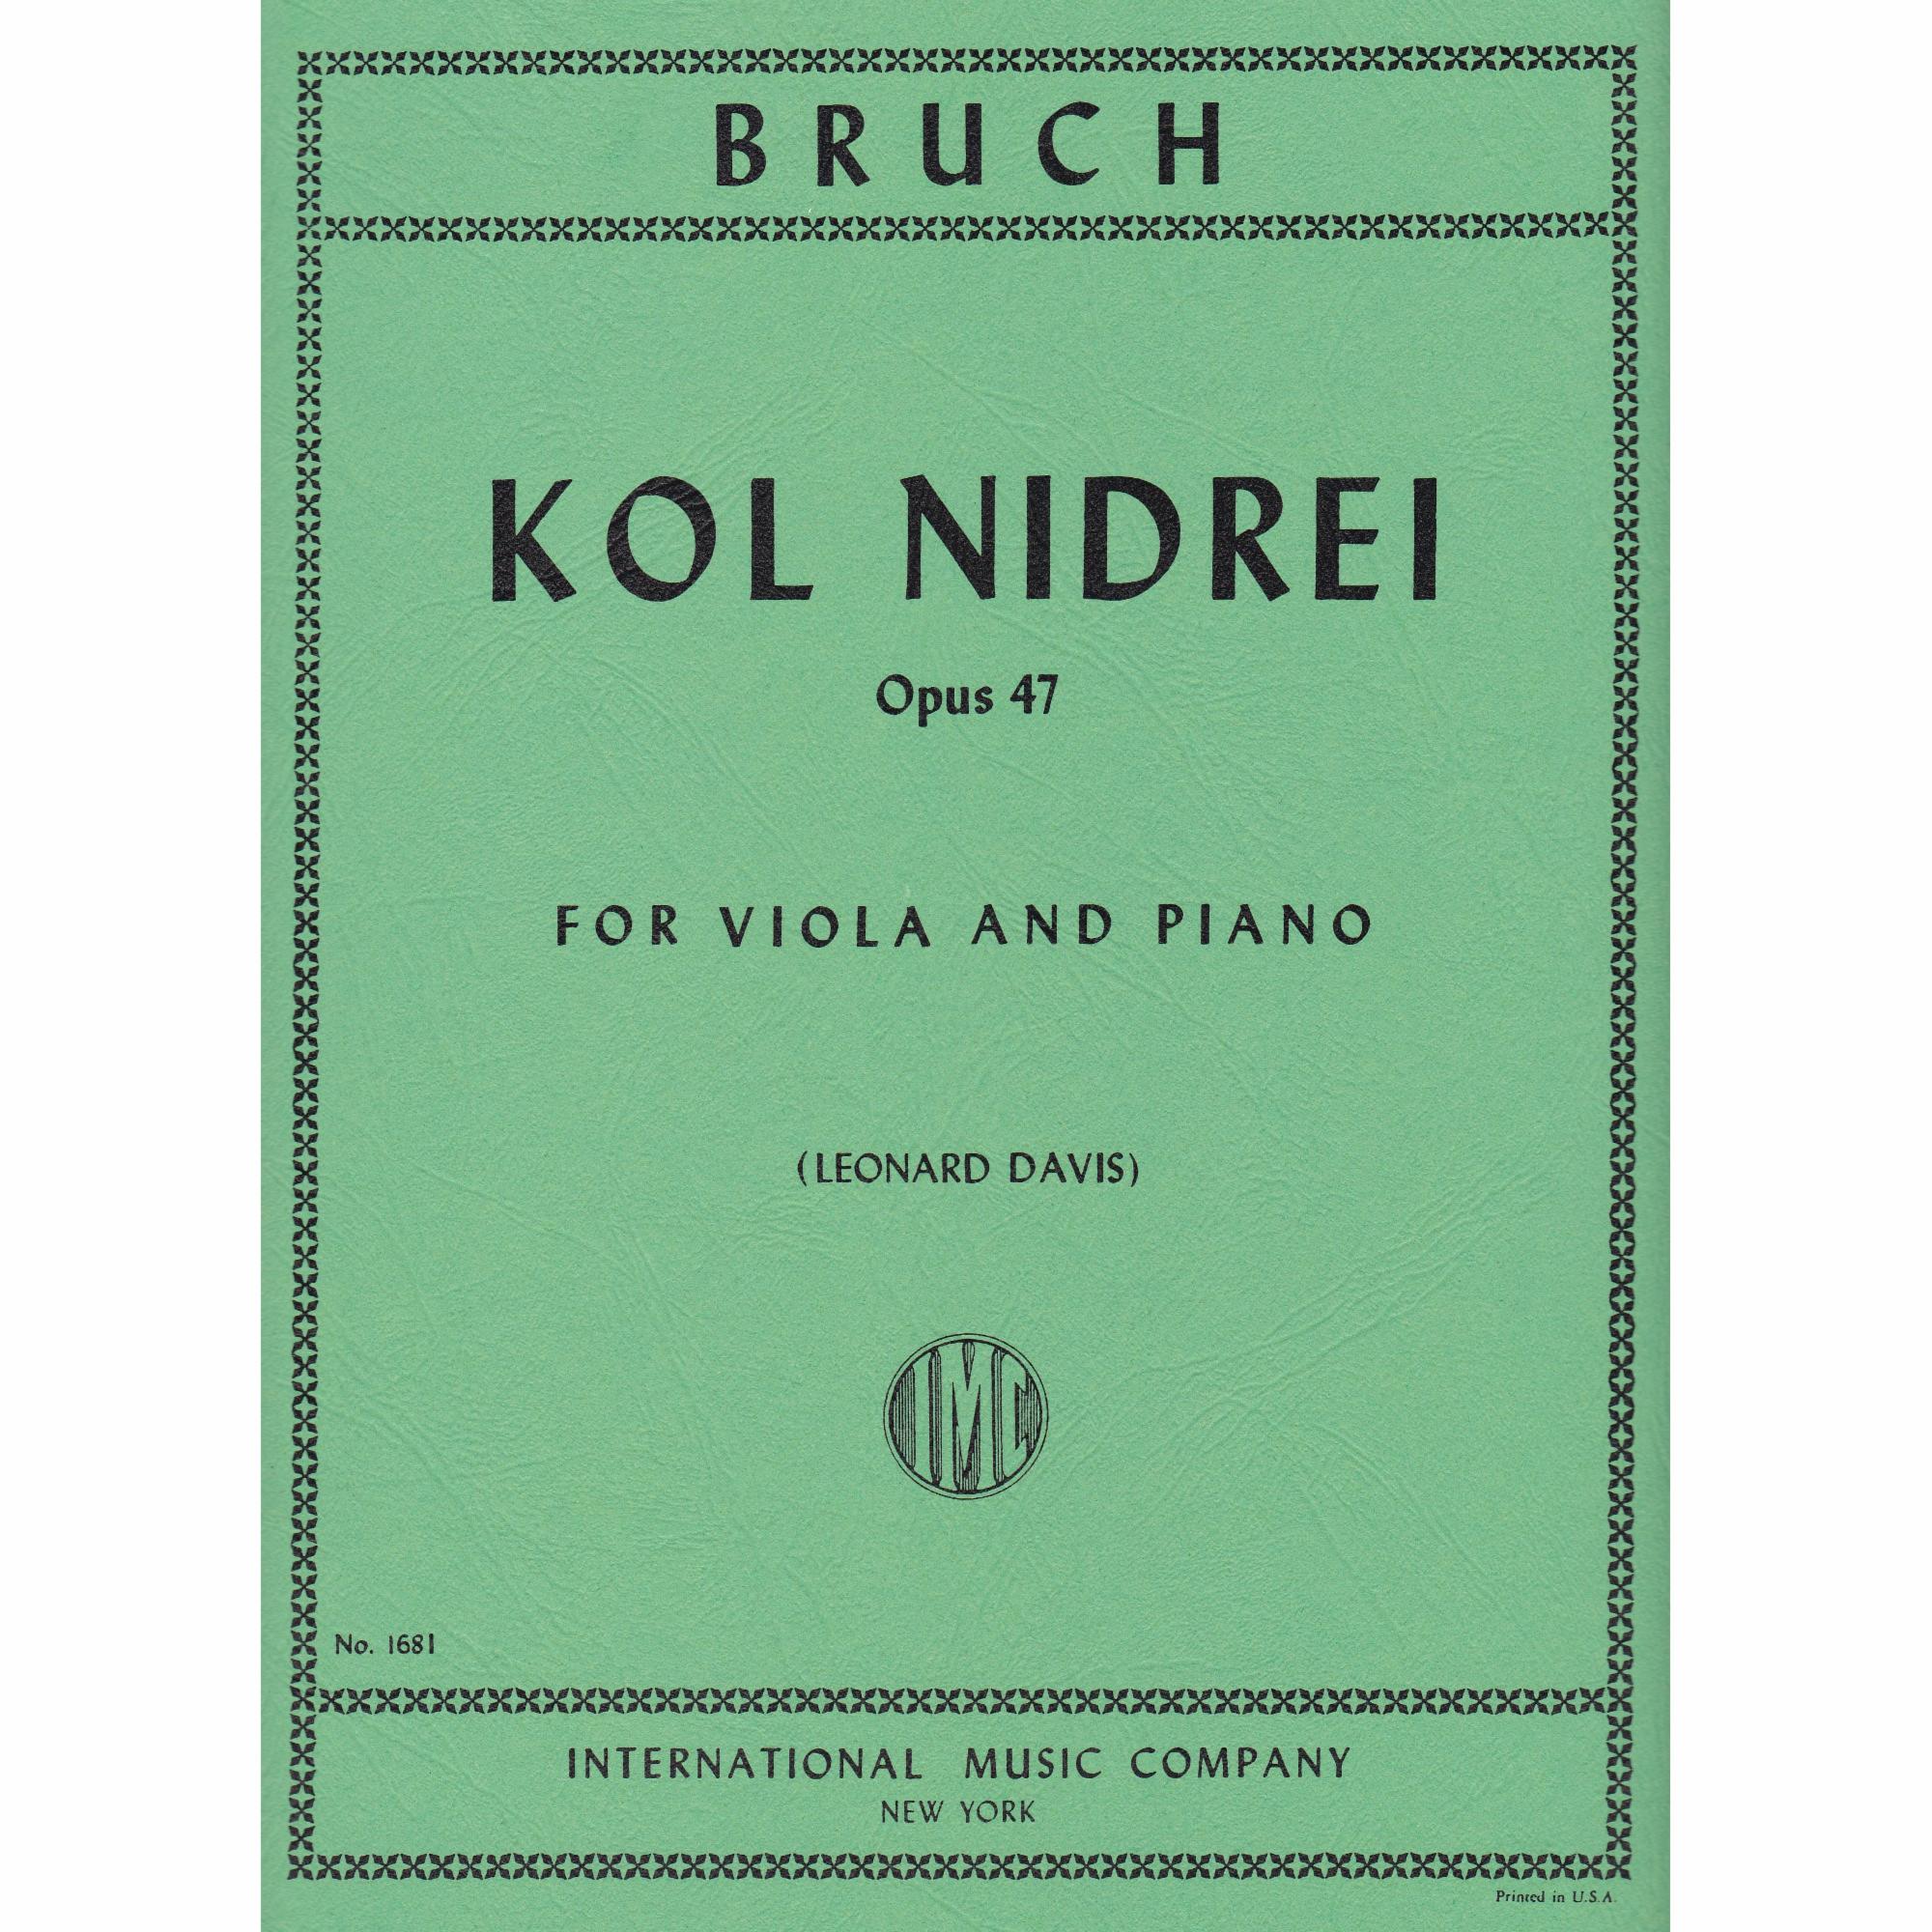 Kol Nidrei for Viola and Piano, Op. 47